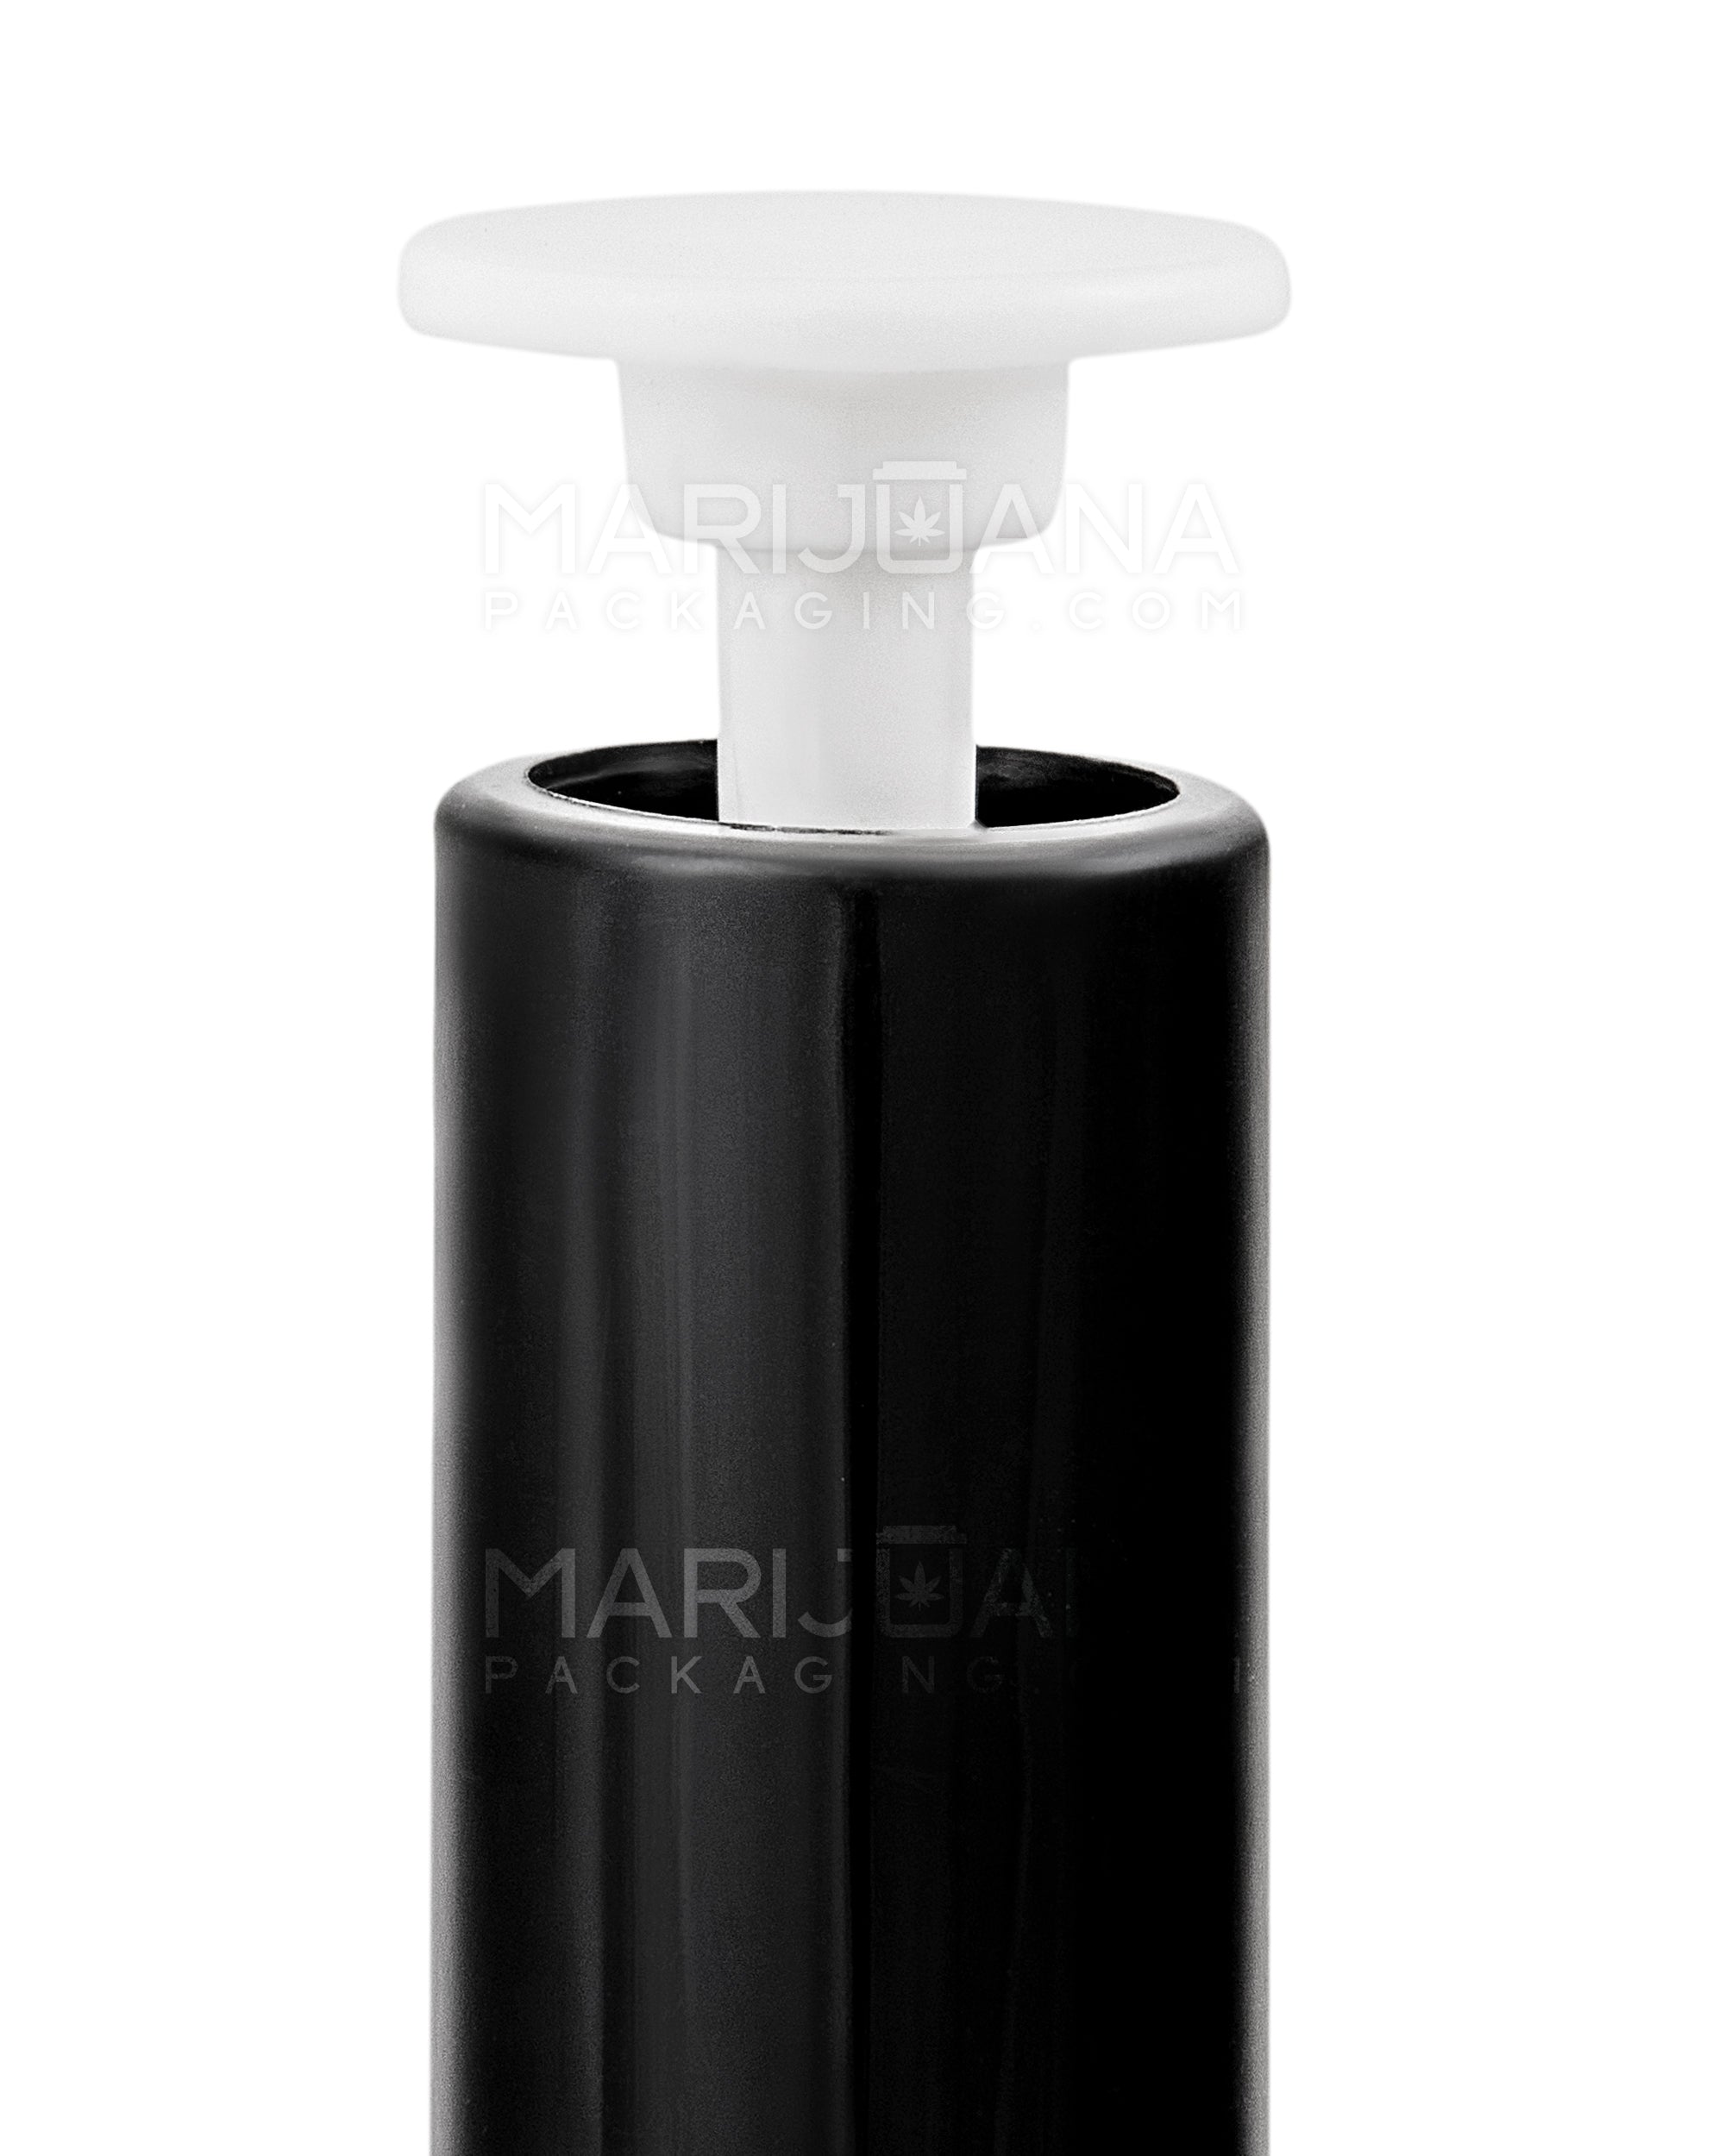 Child Resistant & Luer Lock | DymaPak Twistspenser Black Plastic Dab Applicator Syringes | 1mL - 0.33mL Increments - 6